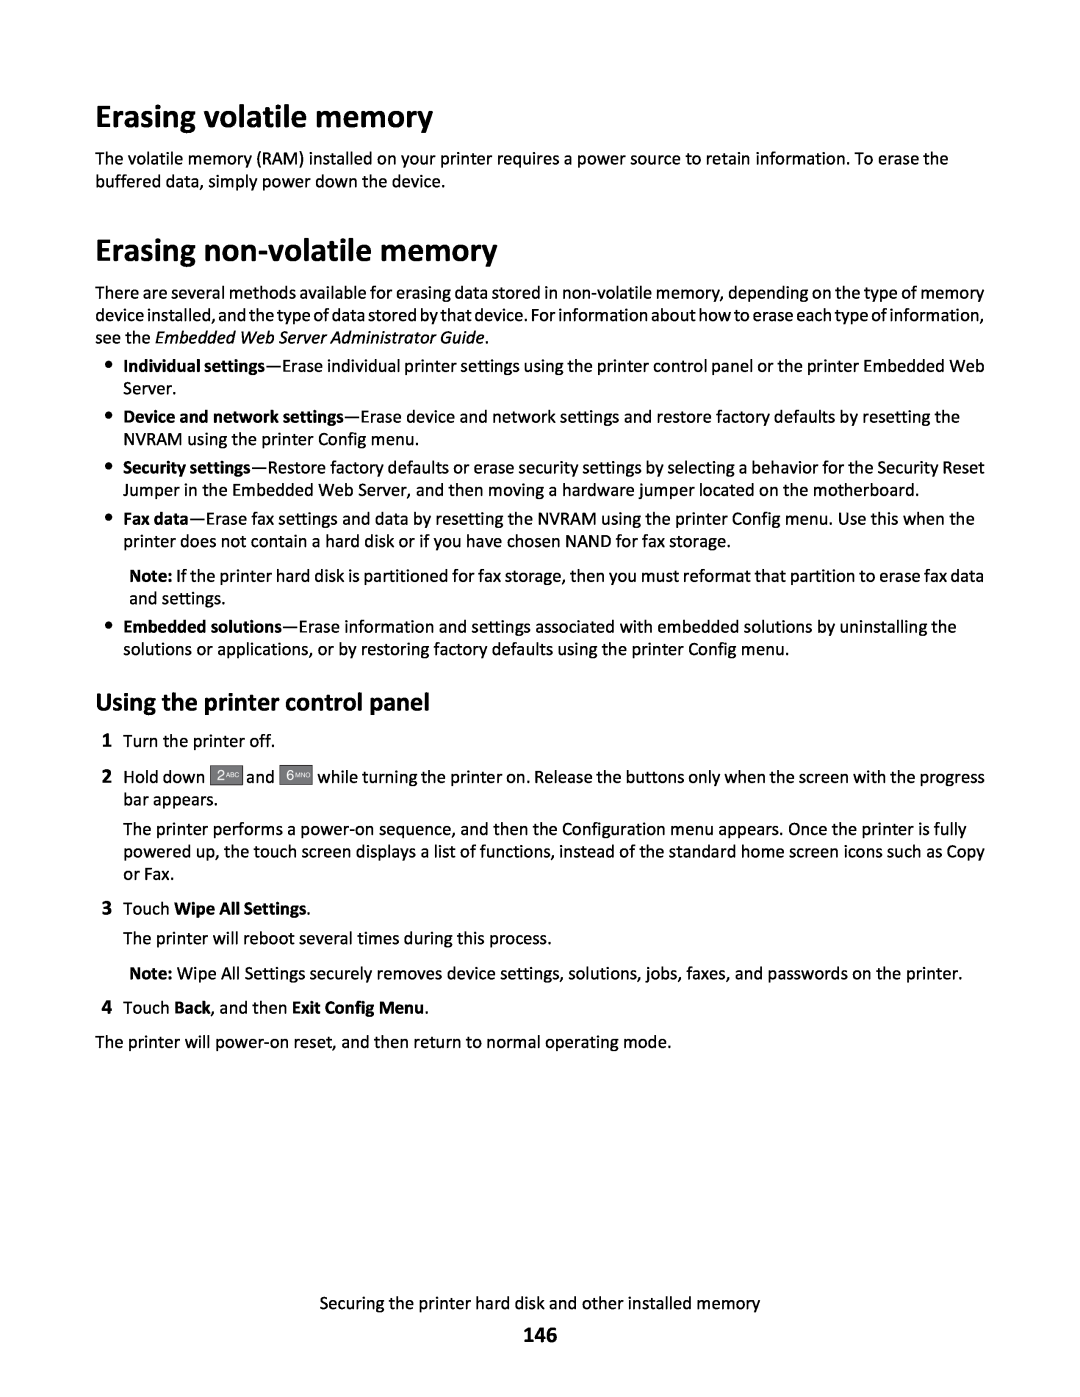 Lexmark C790 manual Erasing volatile memory, Erasing non-volatile memory, Using the printer control panel 